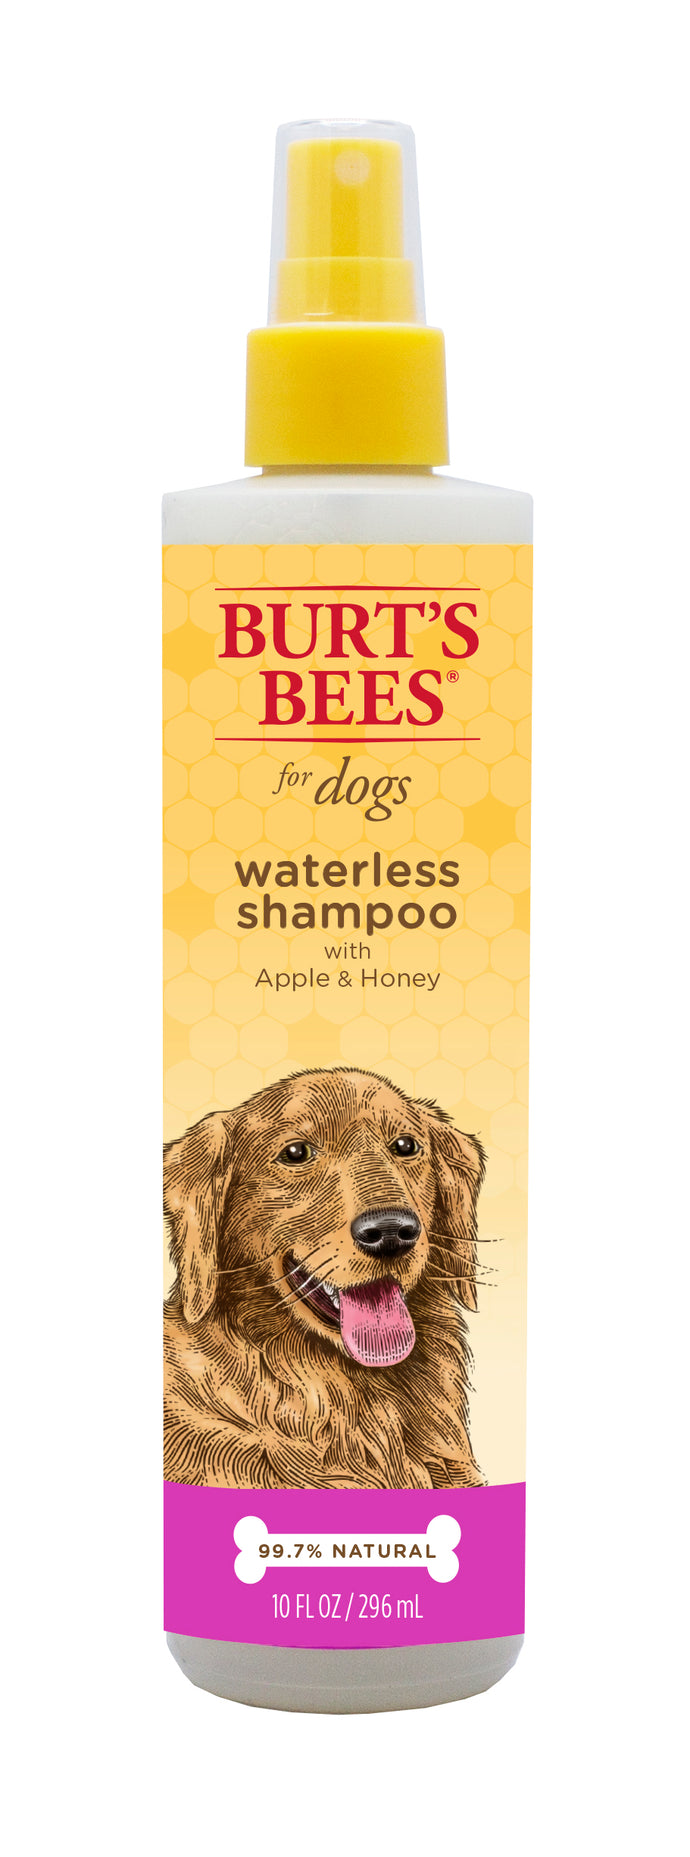 Burt's Bees Waterless Shampoo Spray with Apple and Honey, 10 oz